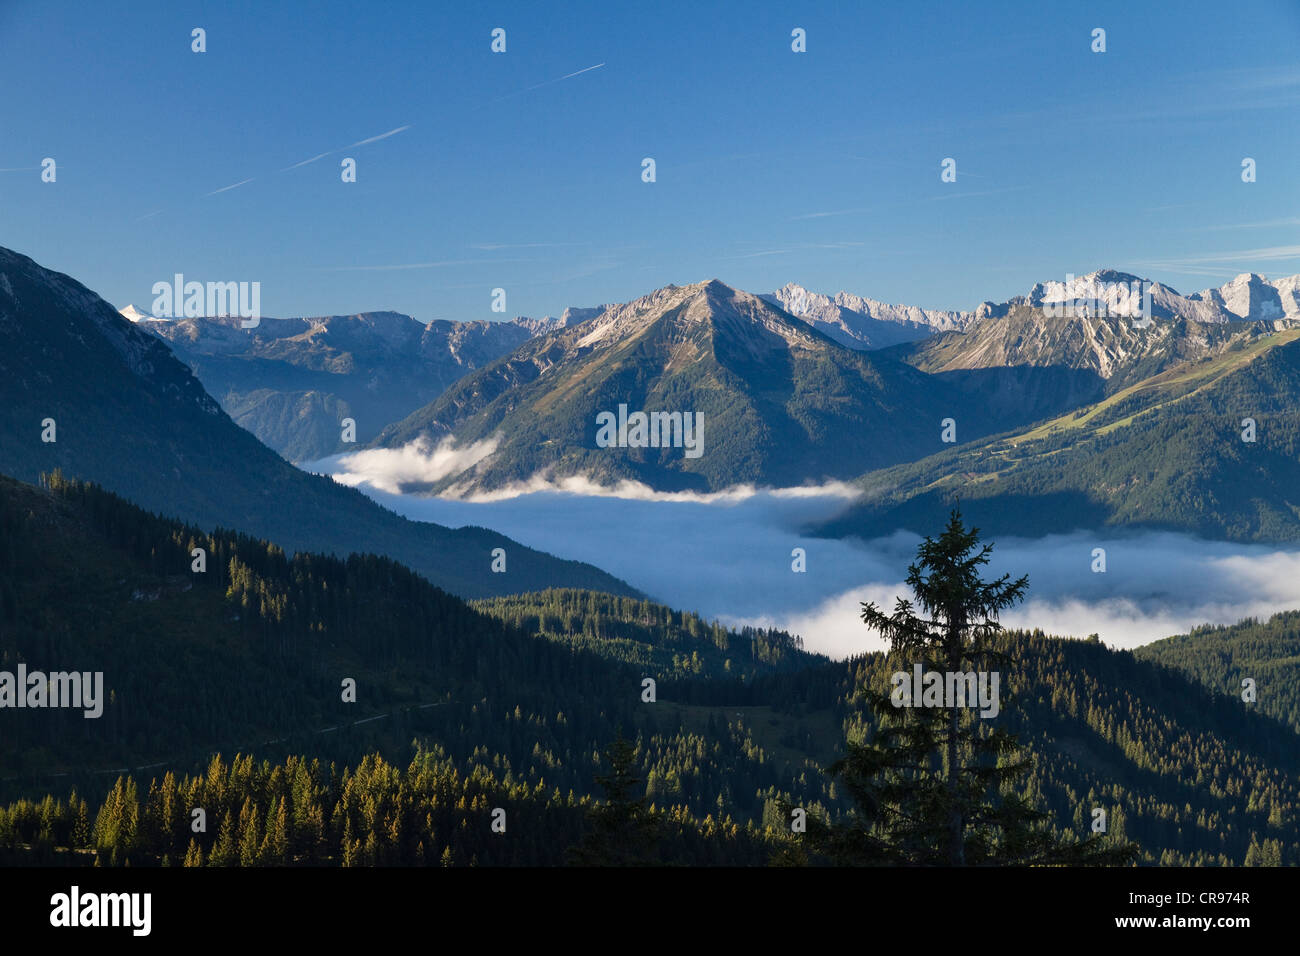 View from the Blauberg Mountains towards Achental Valley, Alps, Austria, Europe Stock Photo